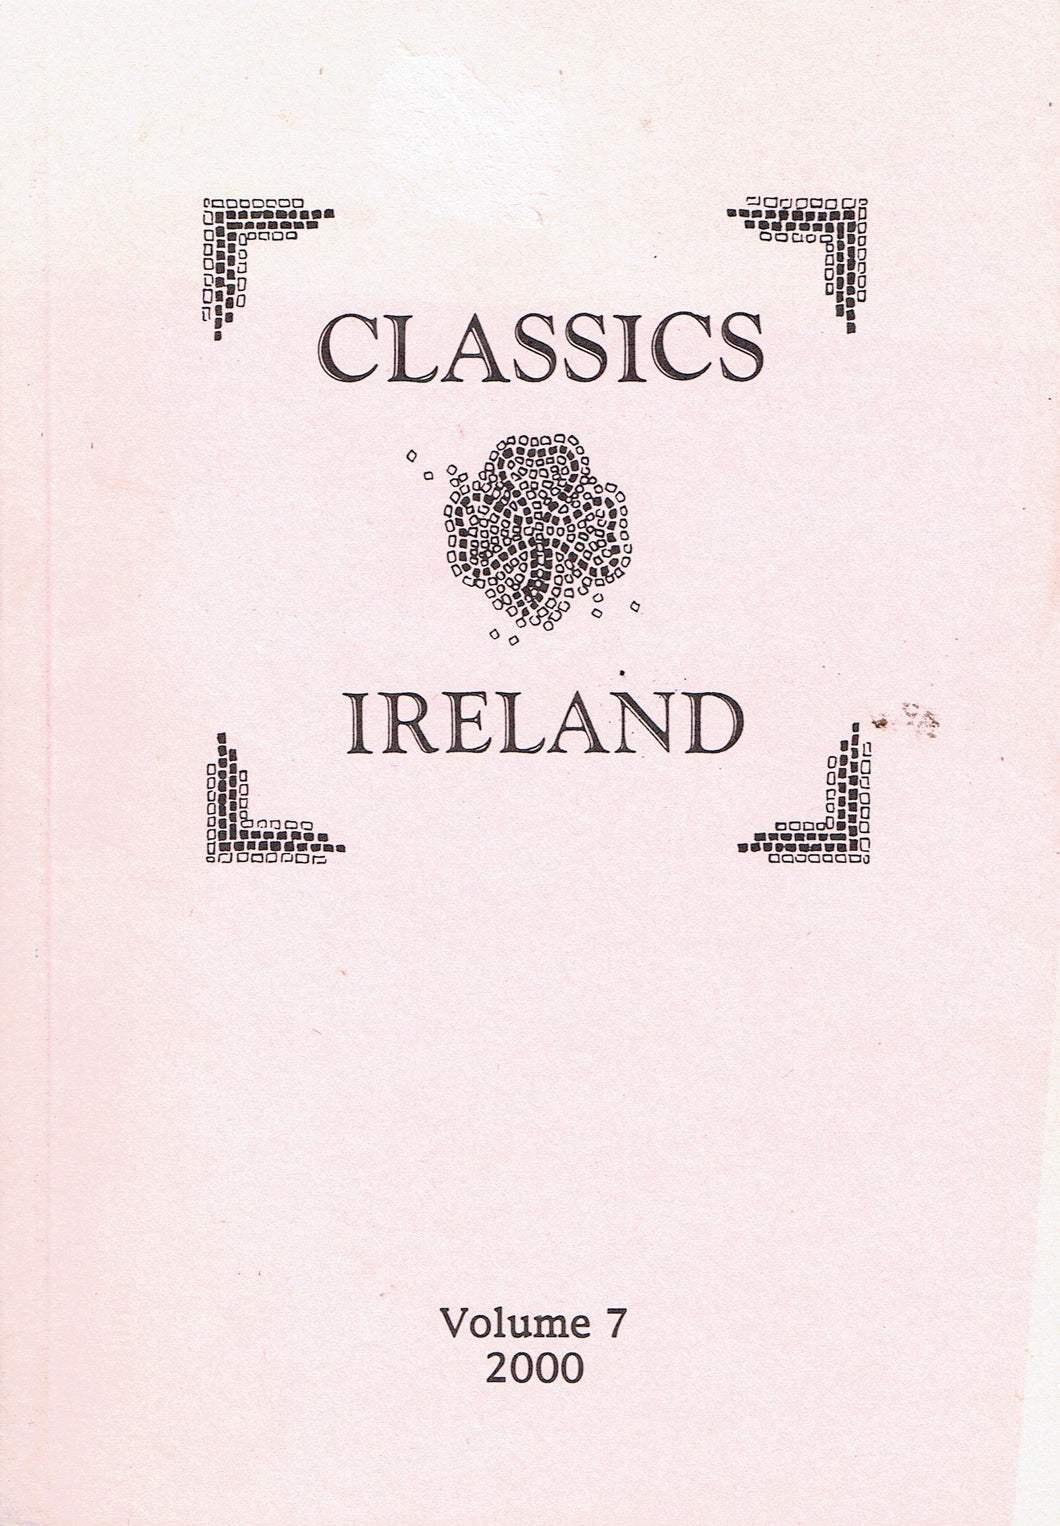 Classics Ireland - Journal of the Classical Association of Ireland, Volume 7, 2000